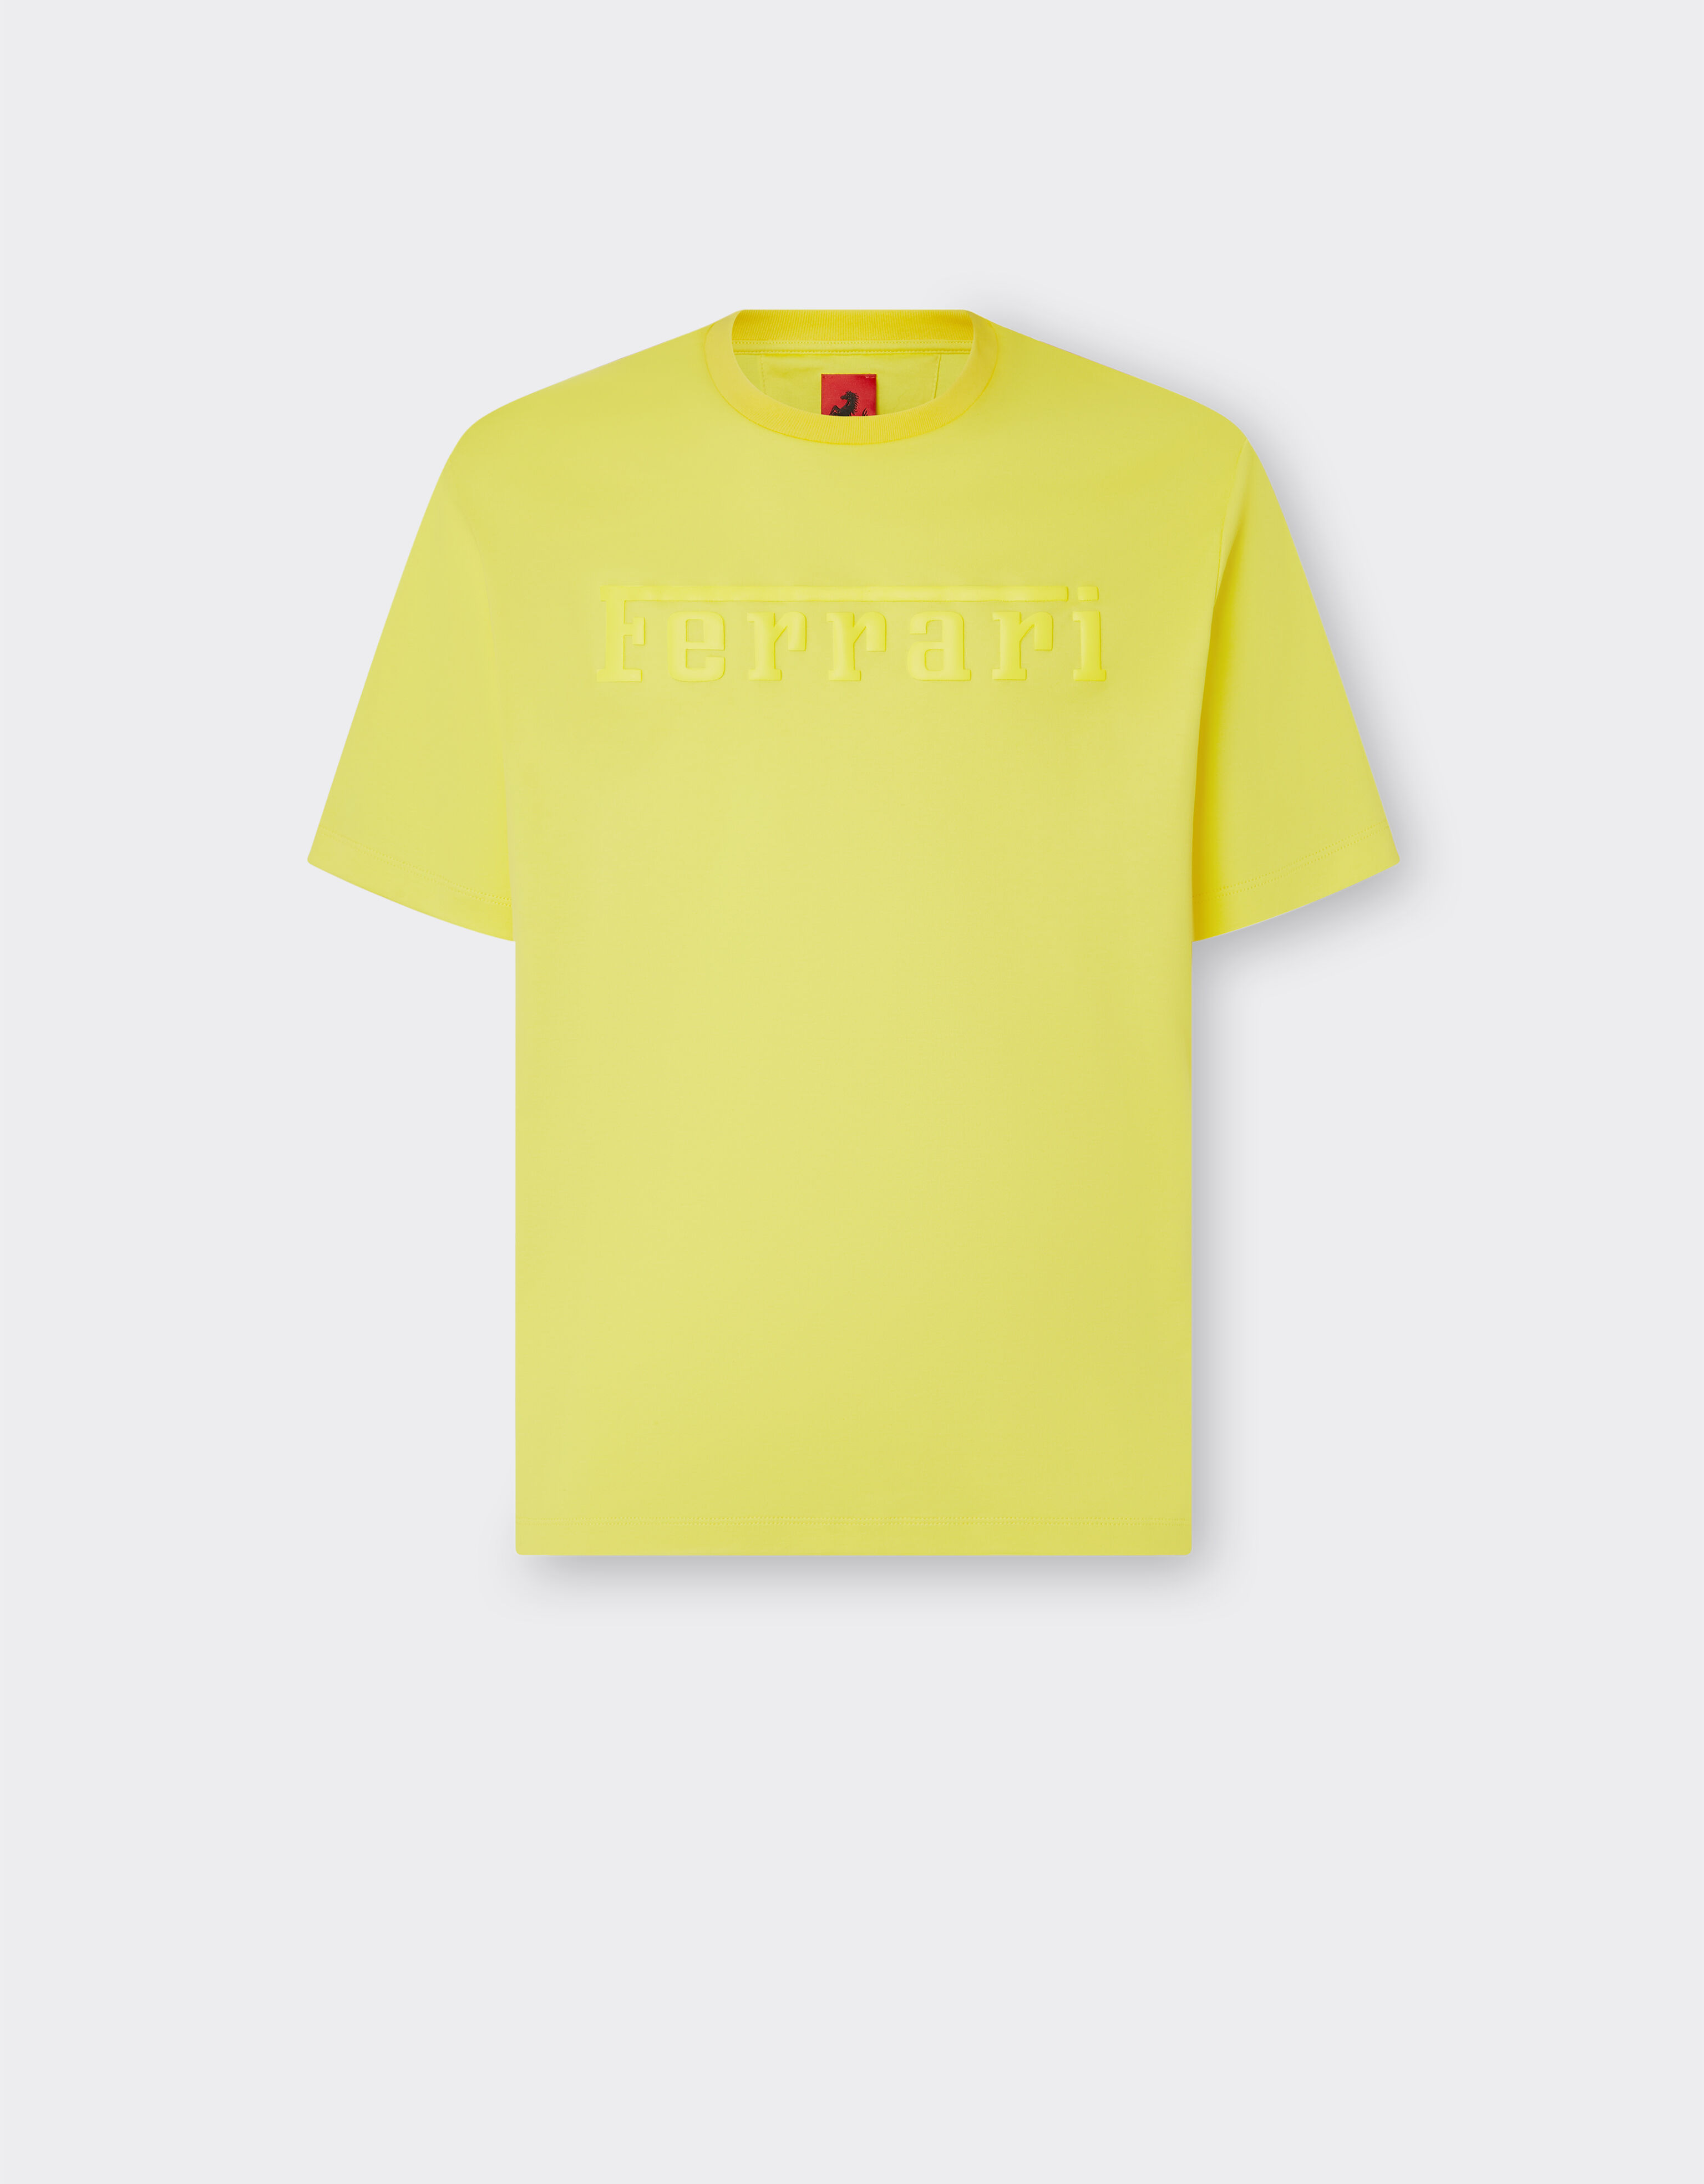 Ferrari Cotton T-shirt with Ferrari logo Giallo Modena 48115f